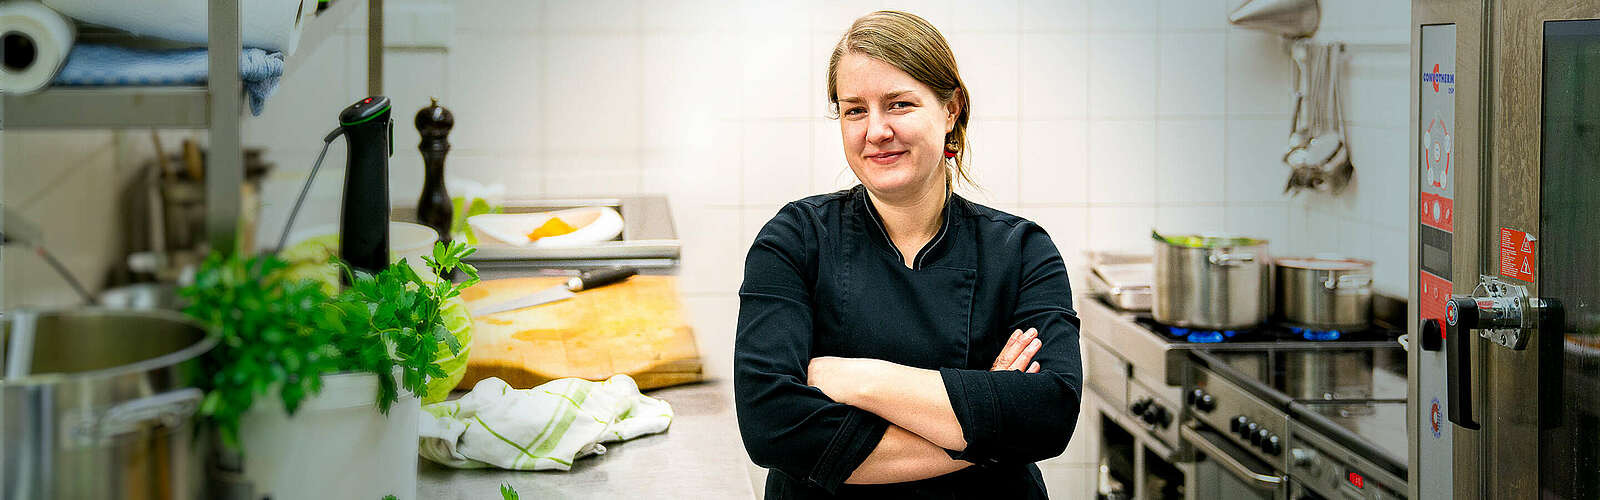 Hanna Präger in der Küche,
        
    

        Foto: Tourismusverband Fläming e.V./Jan Sobotka